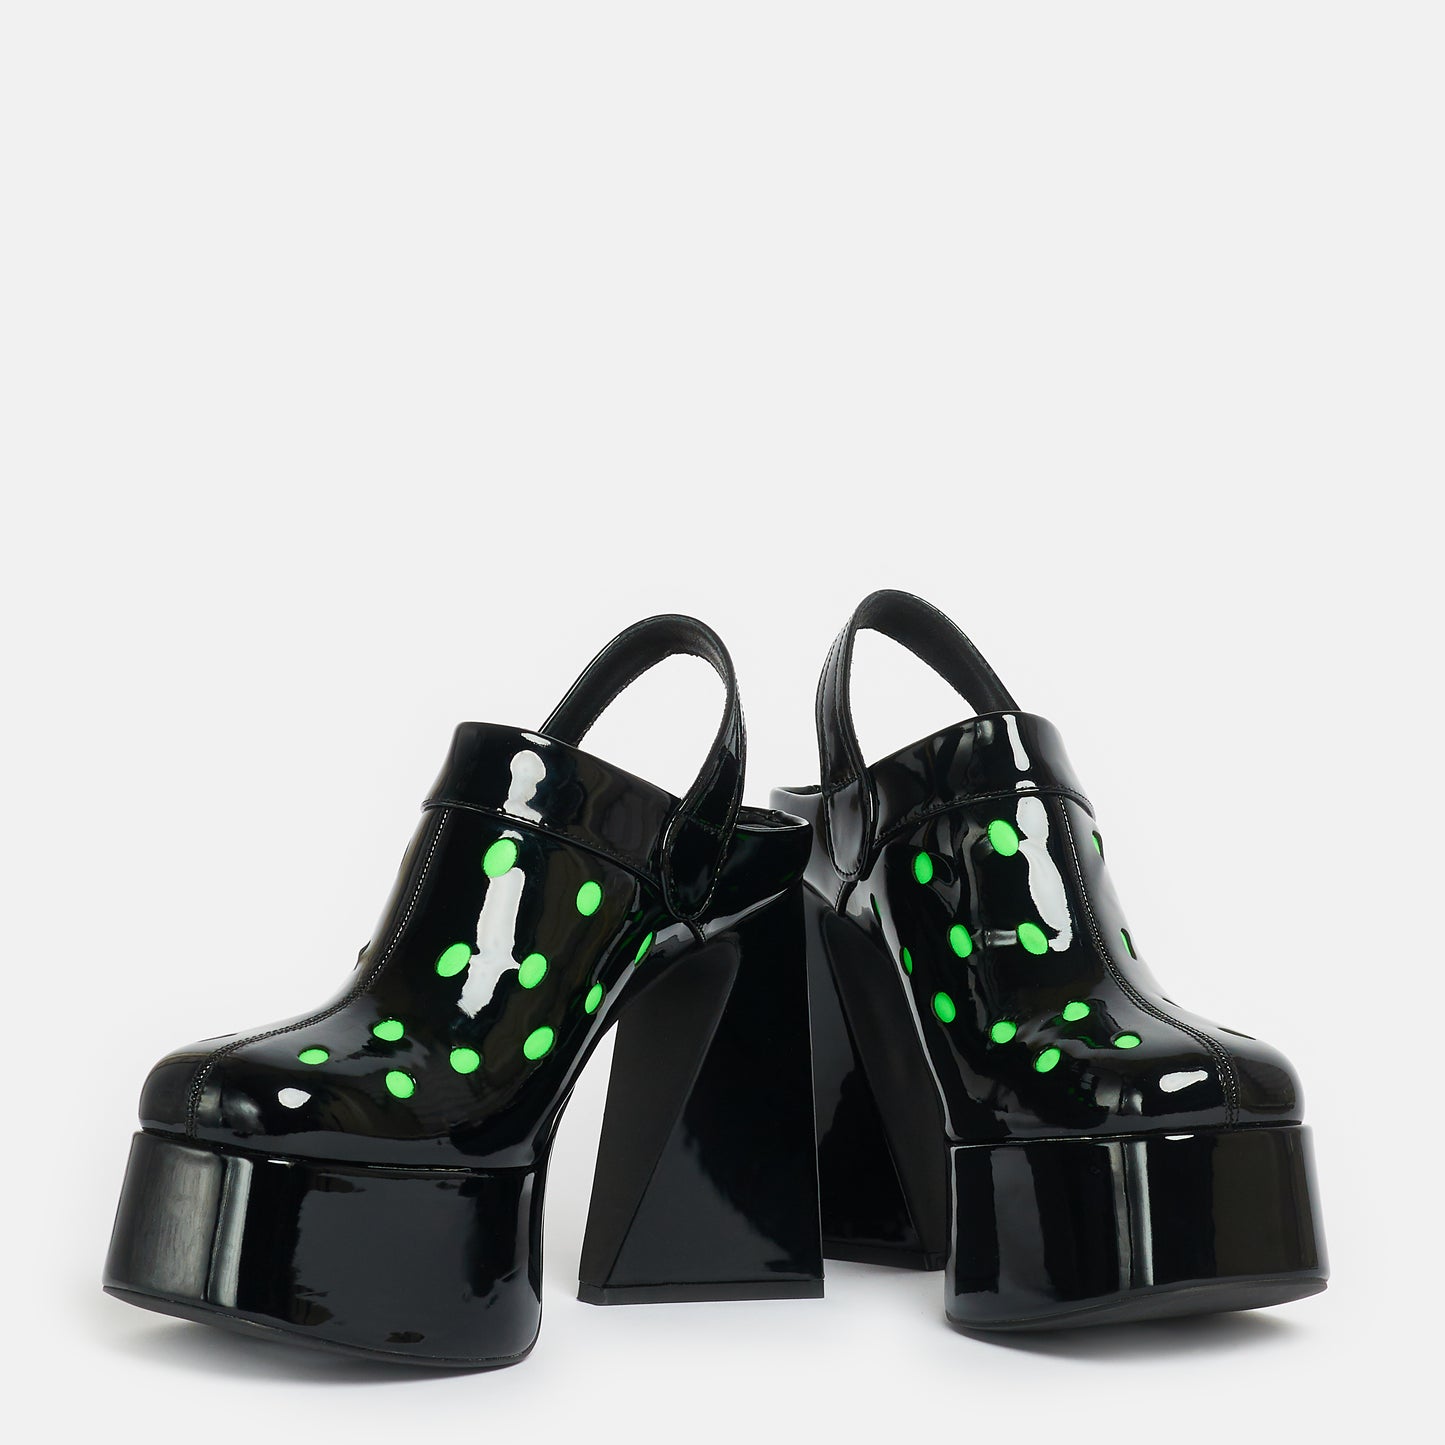 Galactic Boom Neon Alien Heels - Shoes - KOI Footwear - Black - Front View